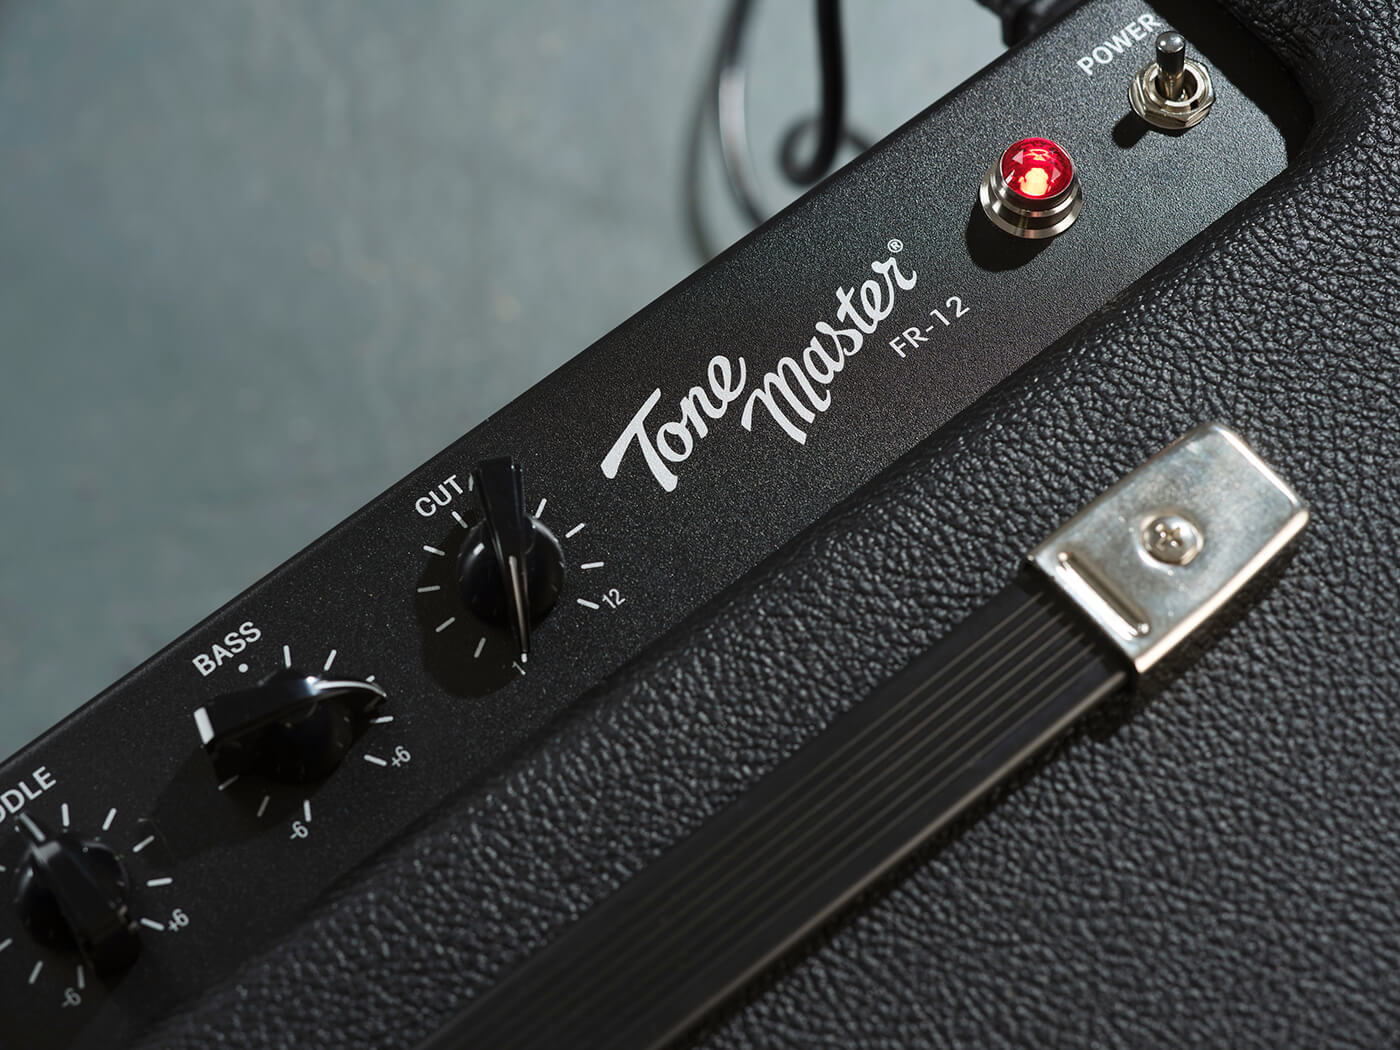 Fender FR12 top panel